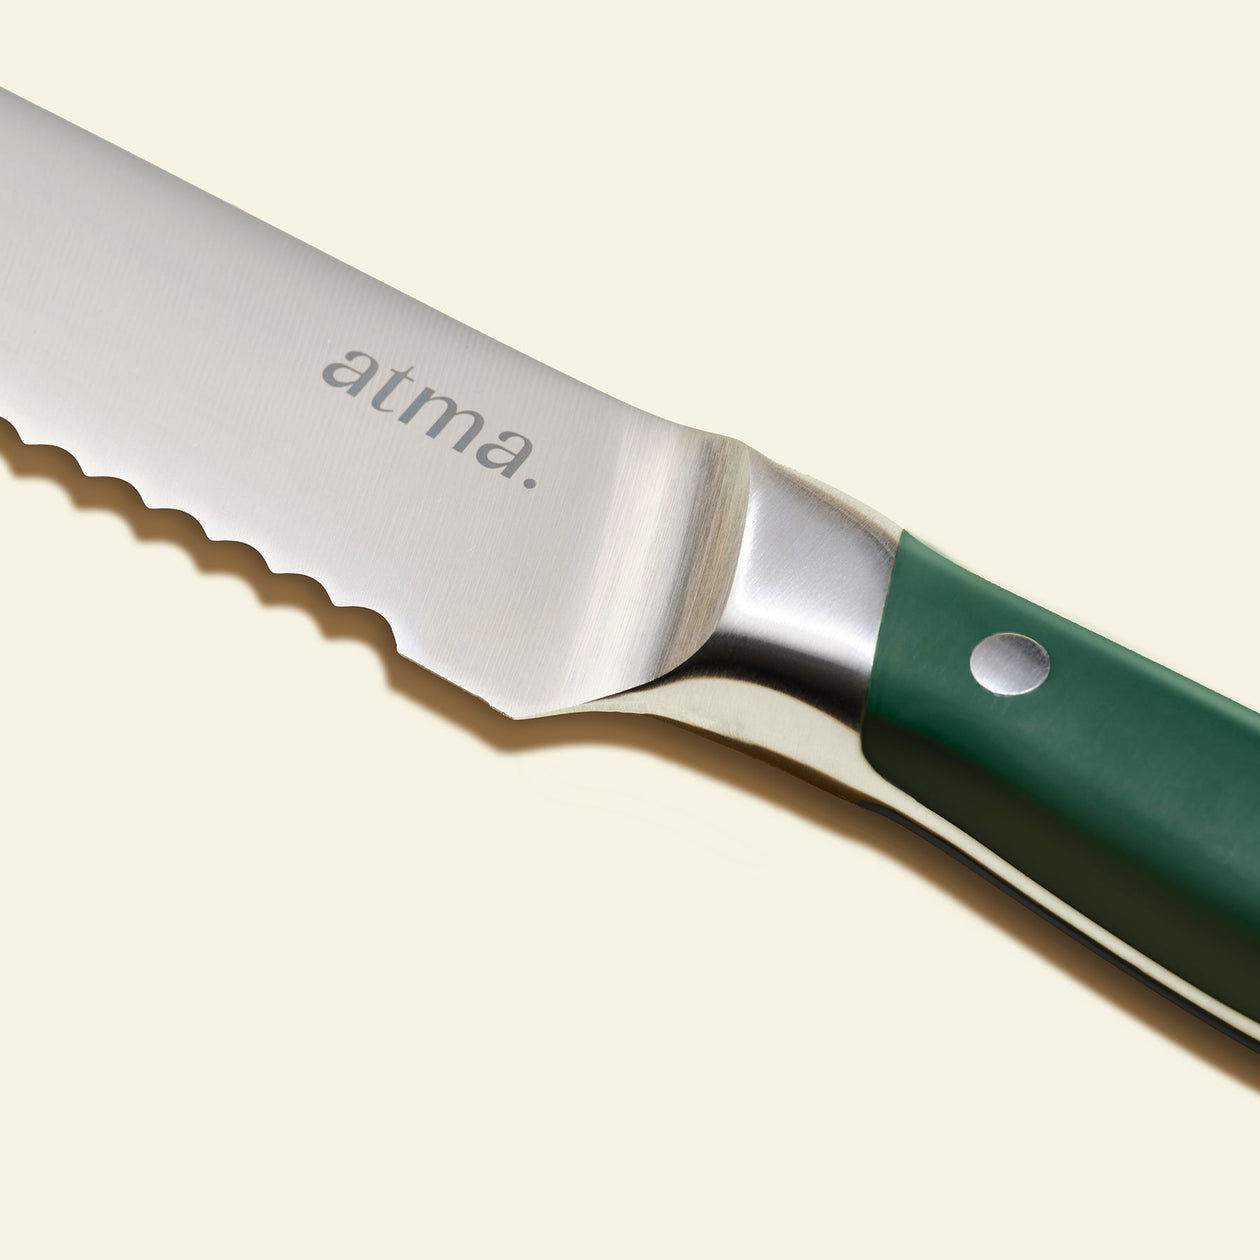 KOTAI PRODUCTS - Serrated Bread Knife - Couteau à pain 